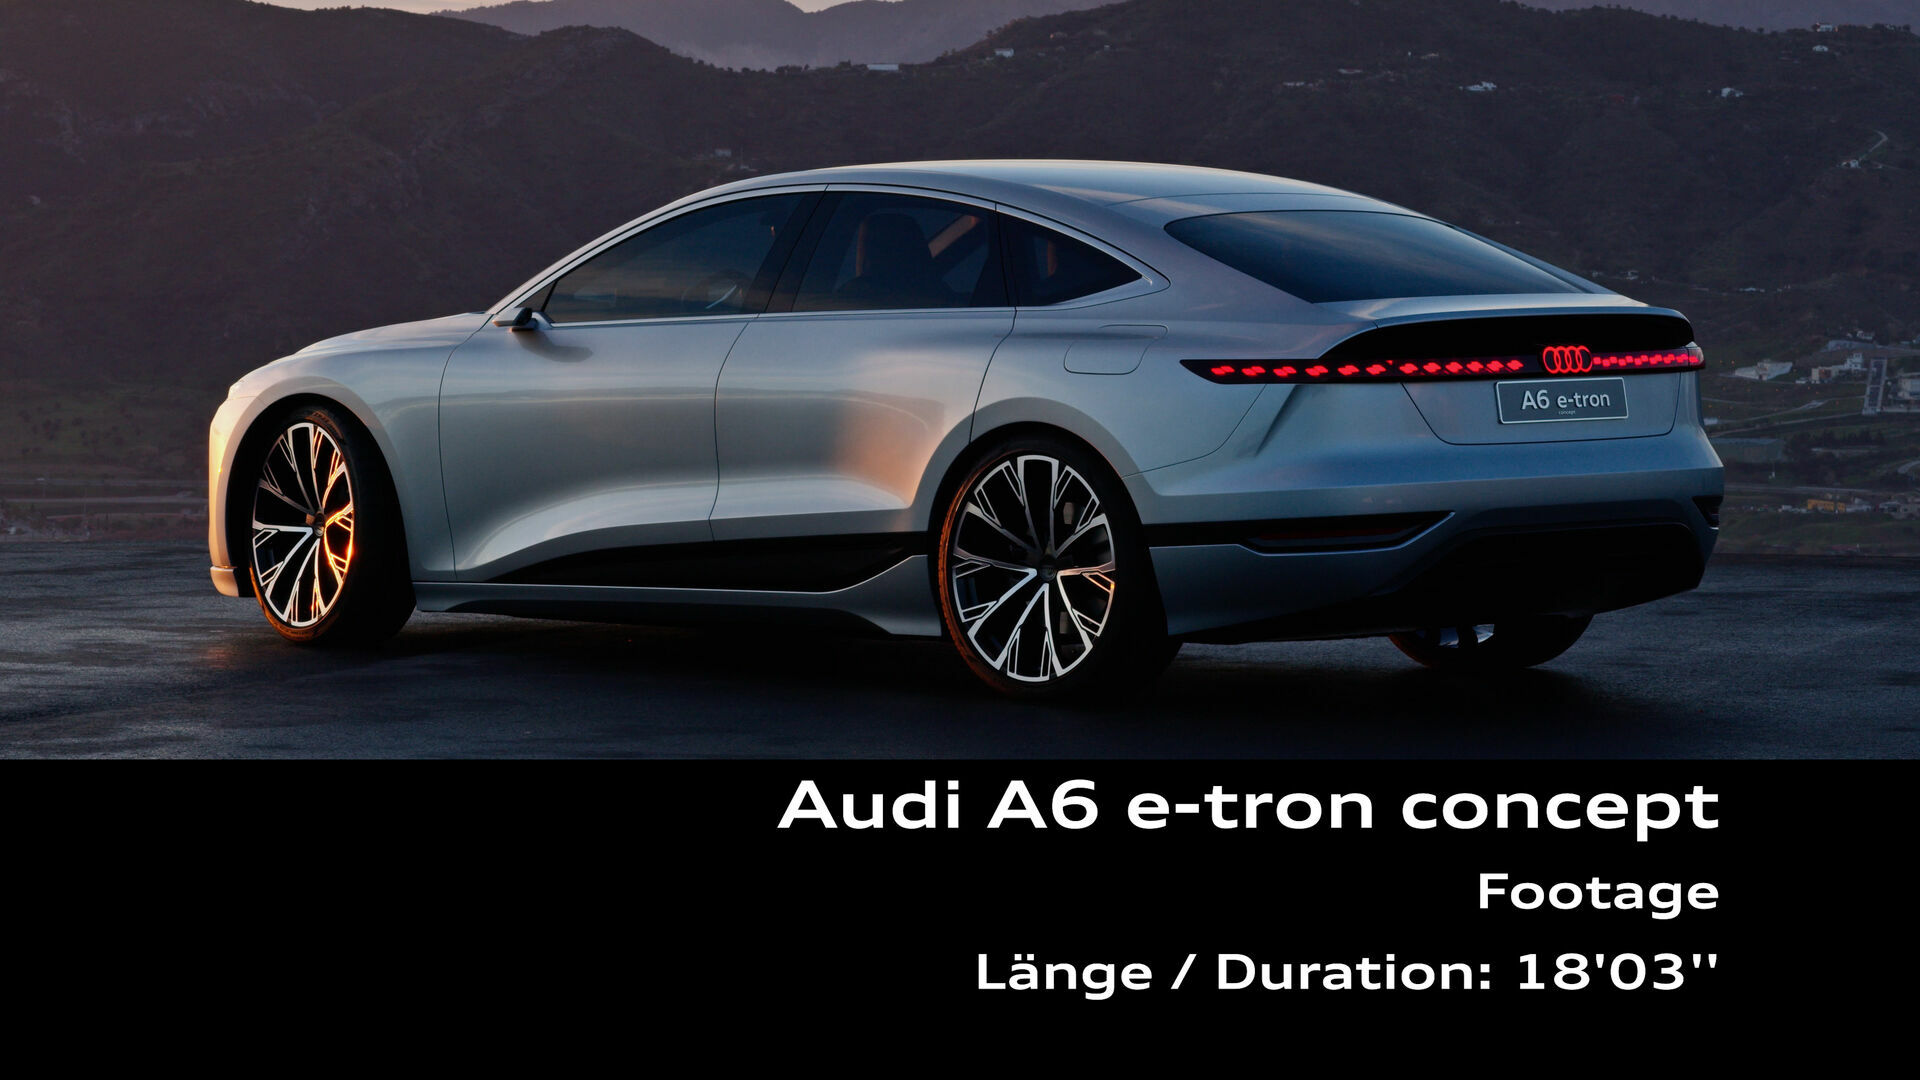 Footage: Audi A6 e-tron concept